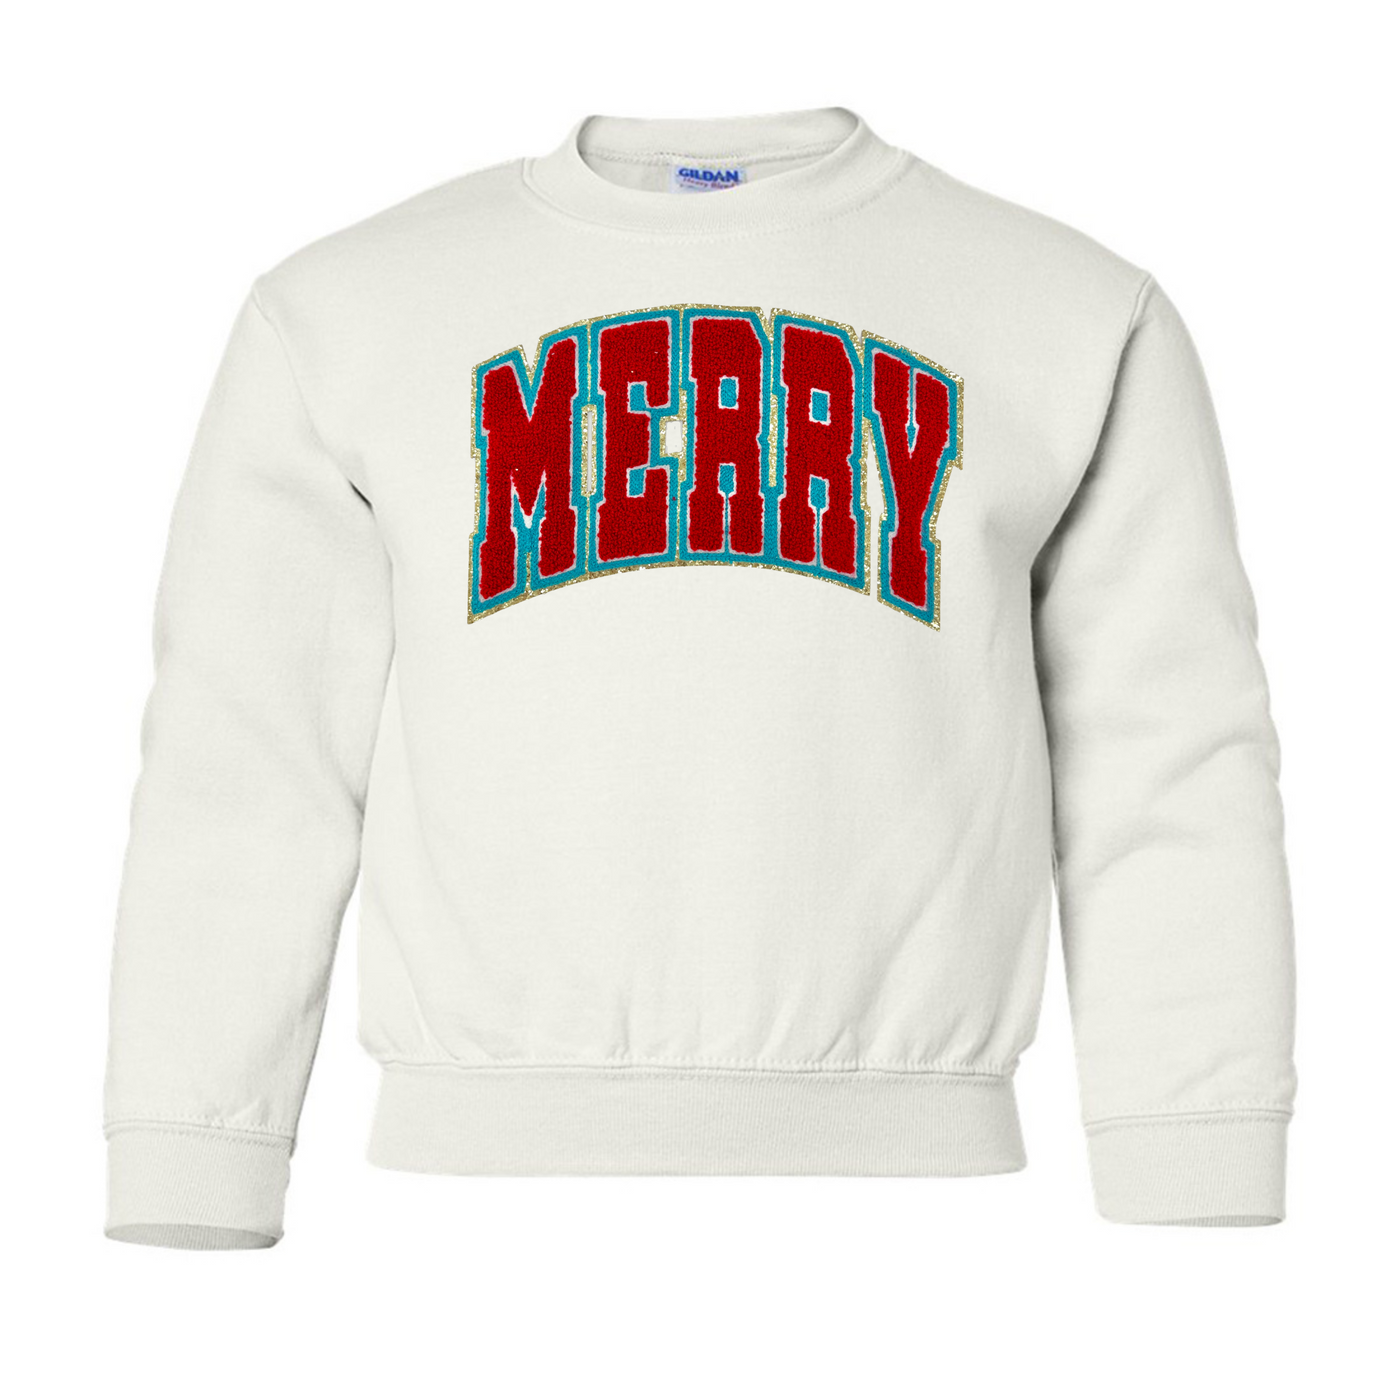 Kids 'Varsity Merry' Letter Patch Crewneck Sweatshirt